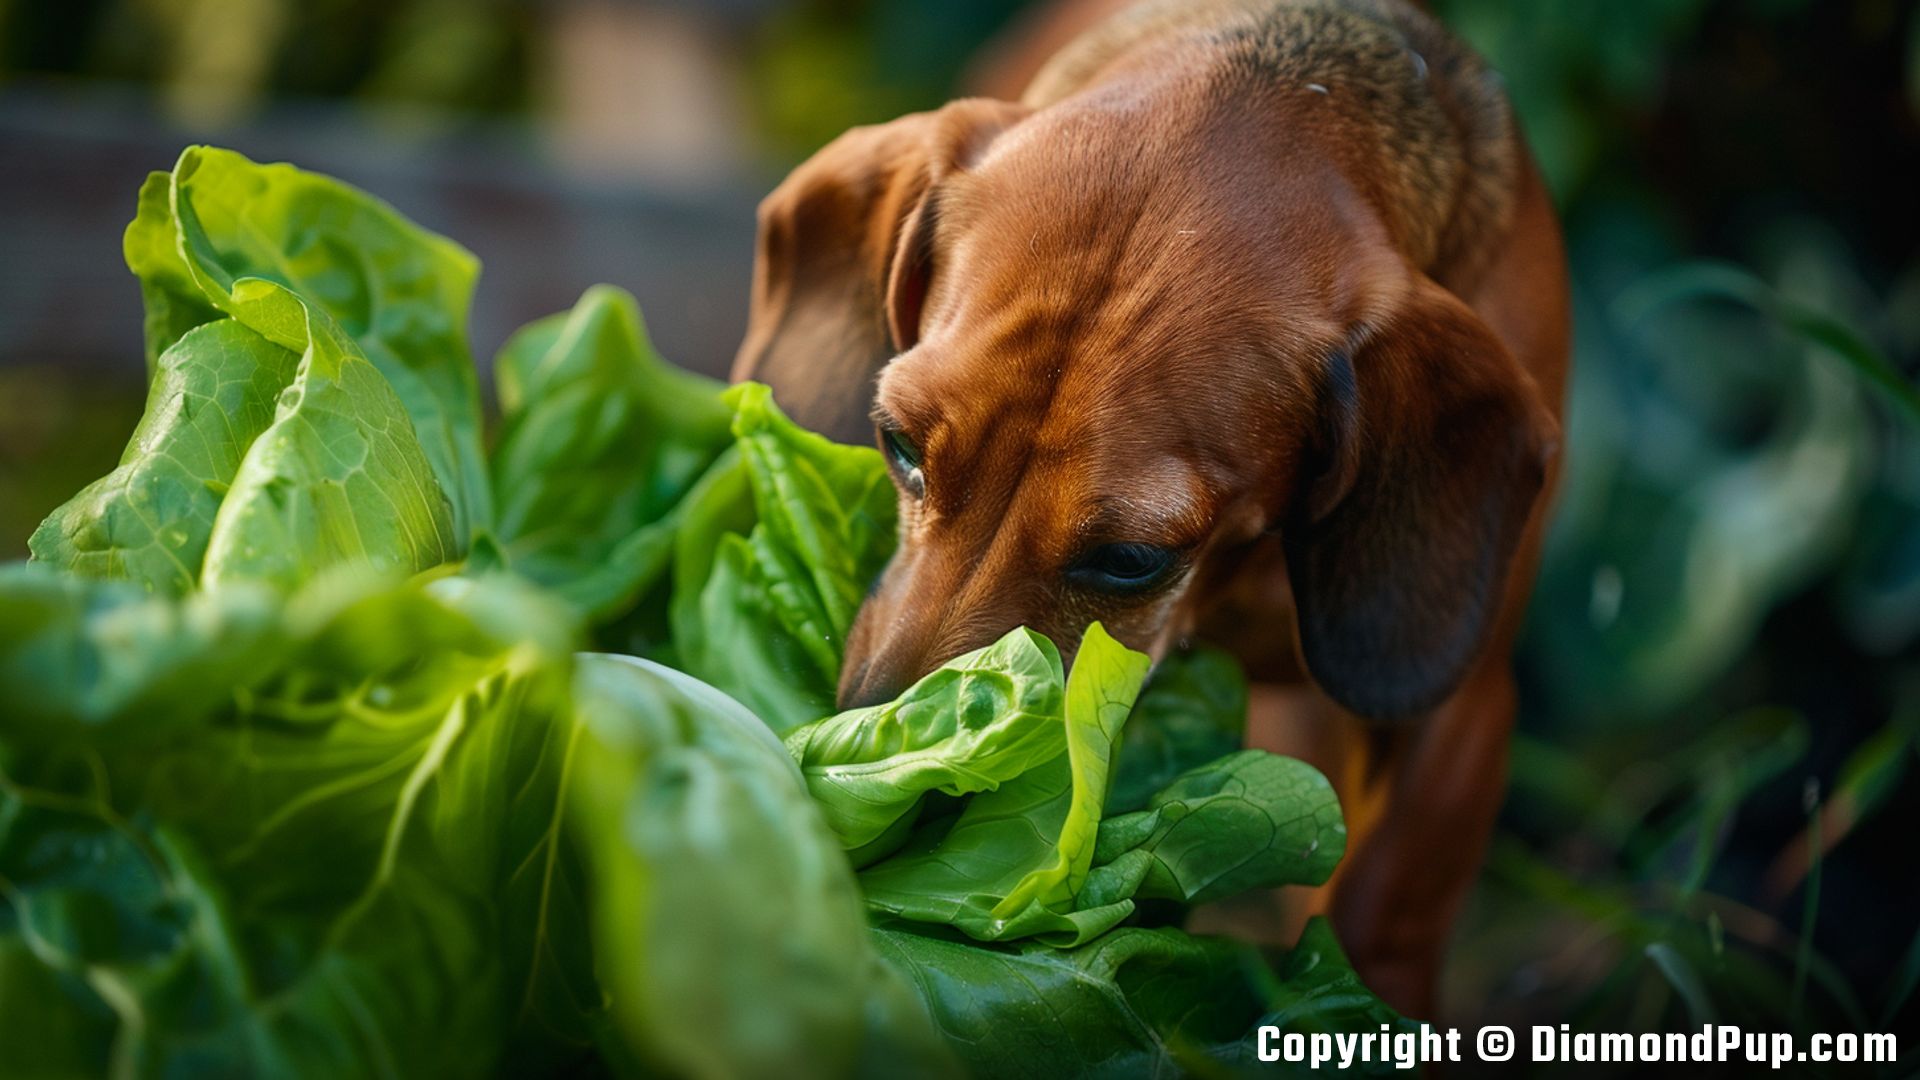 Image of Dachshund Eating Lettuce